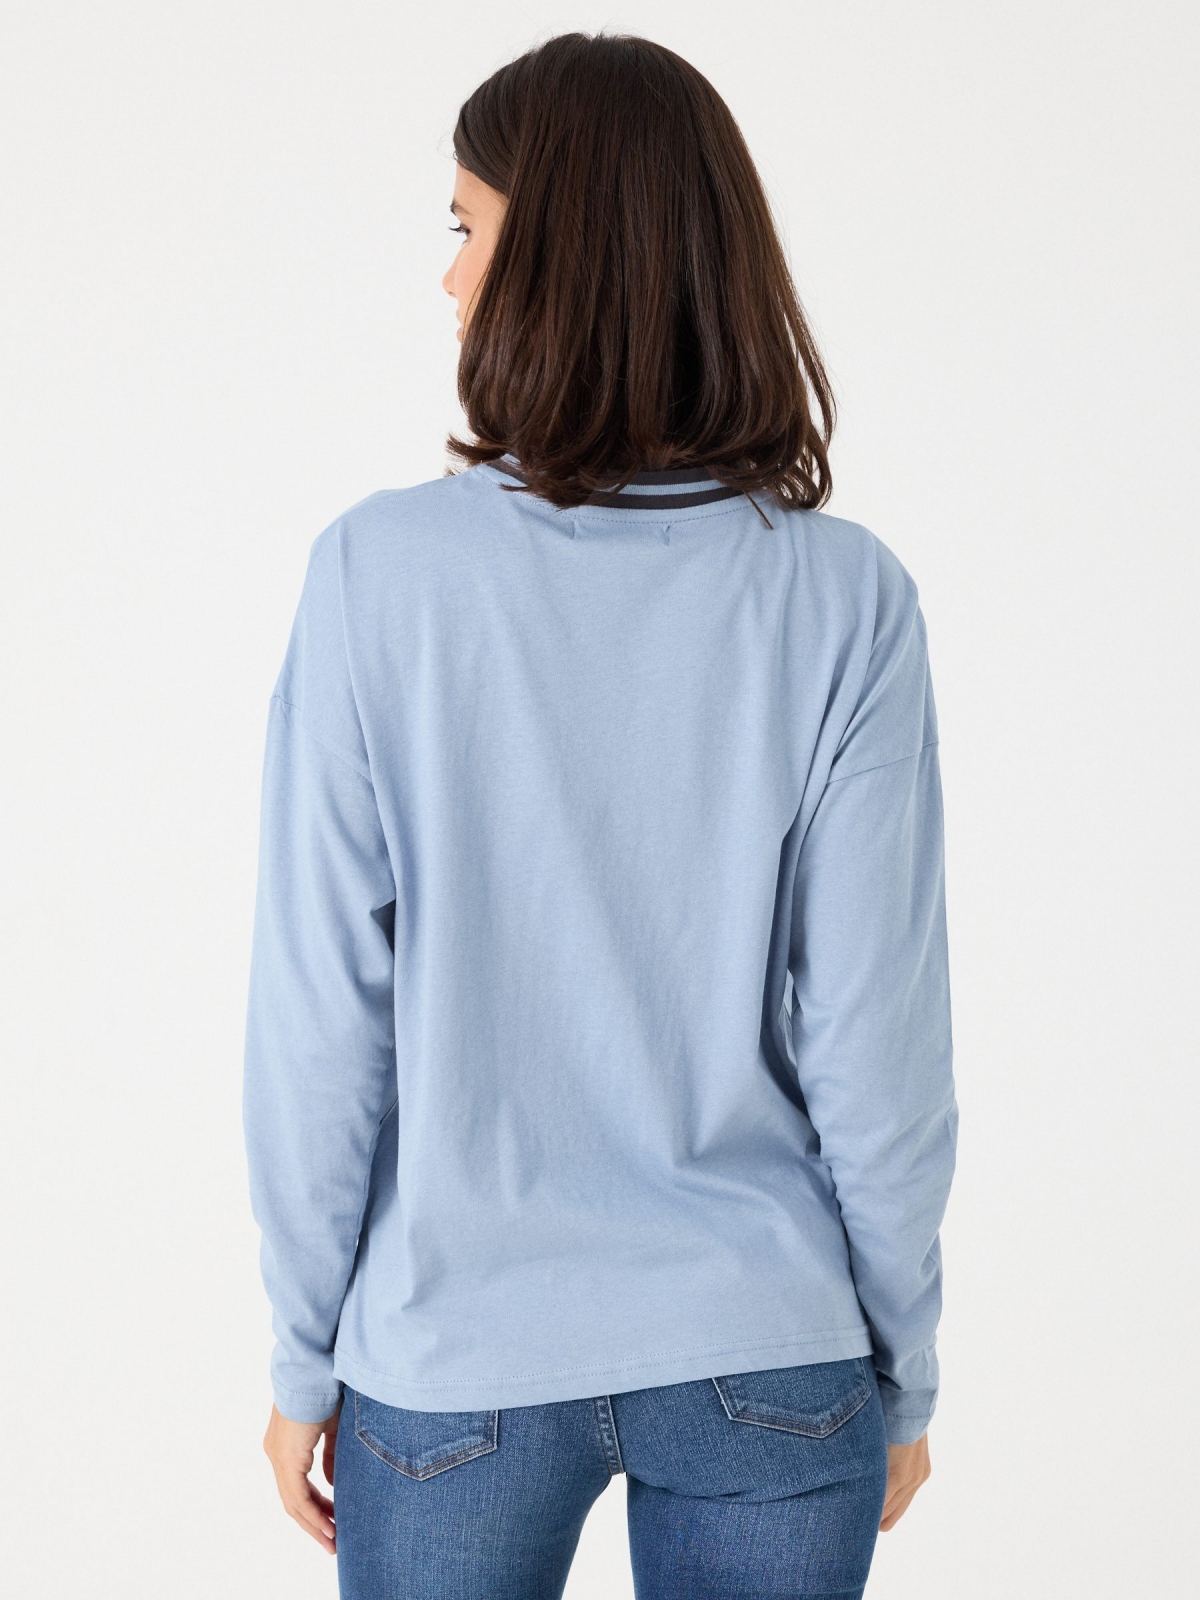 T-shirt estampada gola canelada azul claro vista meia traseira